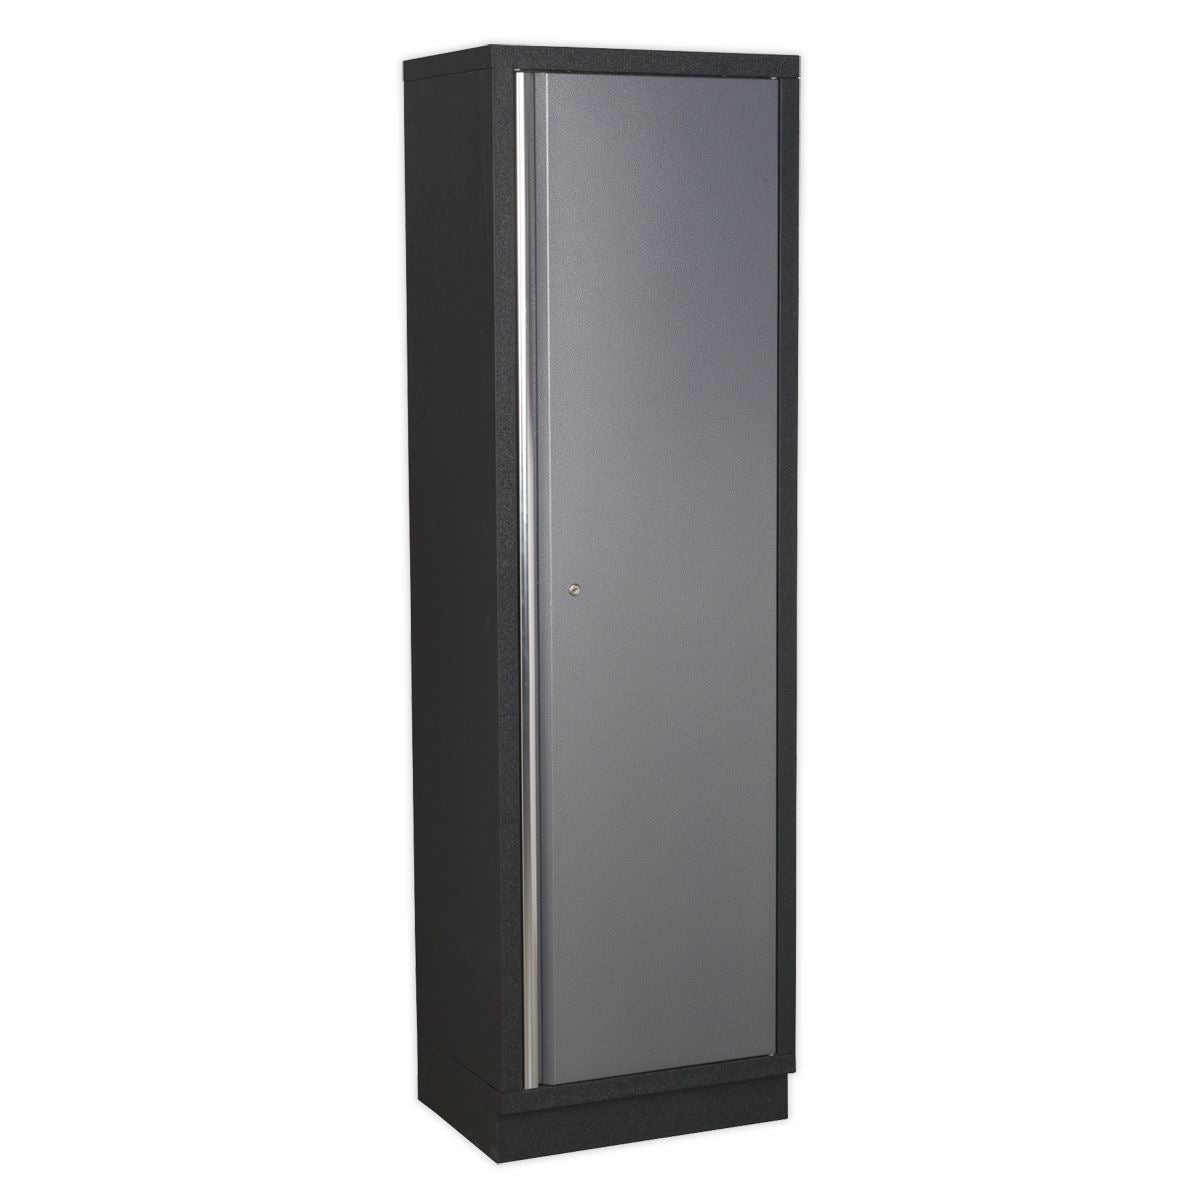 Sealey Superline Pro Modular Floor Cabinet Full Height 600mm